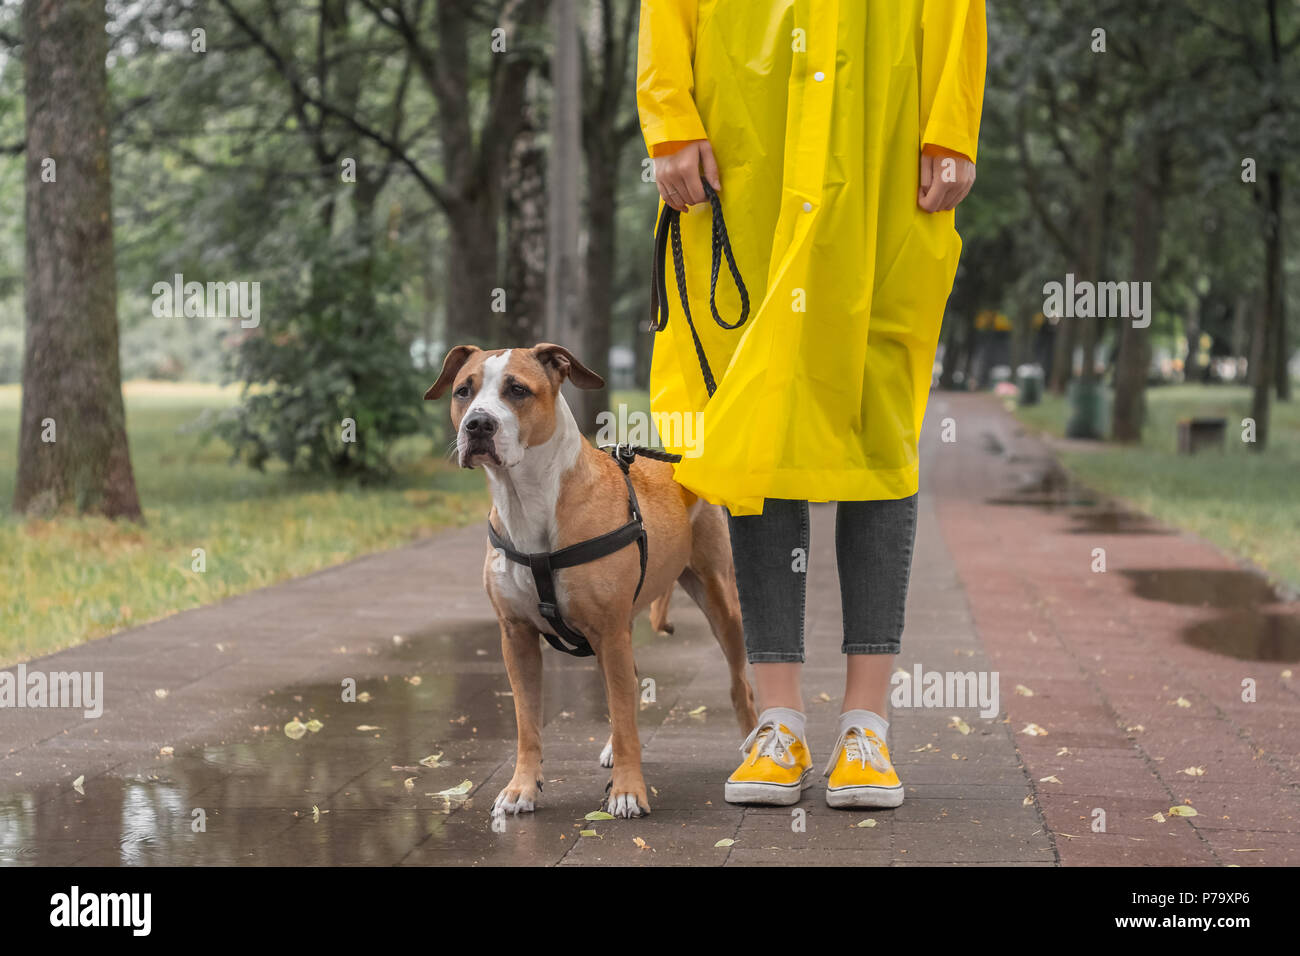 Walking the dog in raincoat on rainy day. Stock Photo